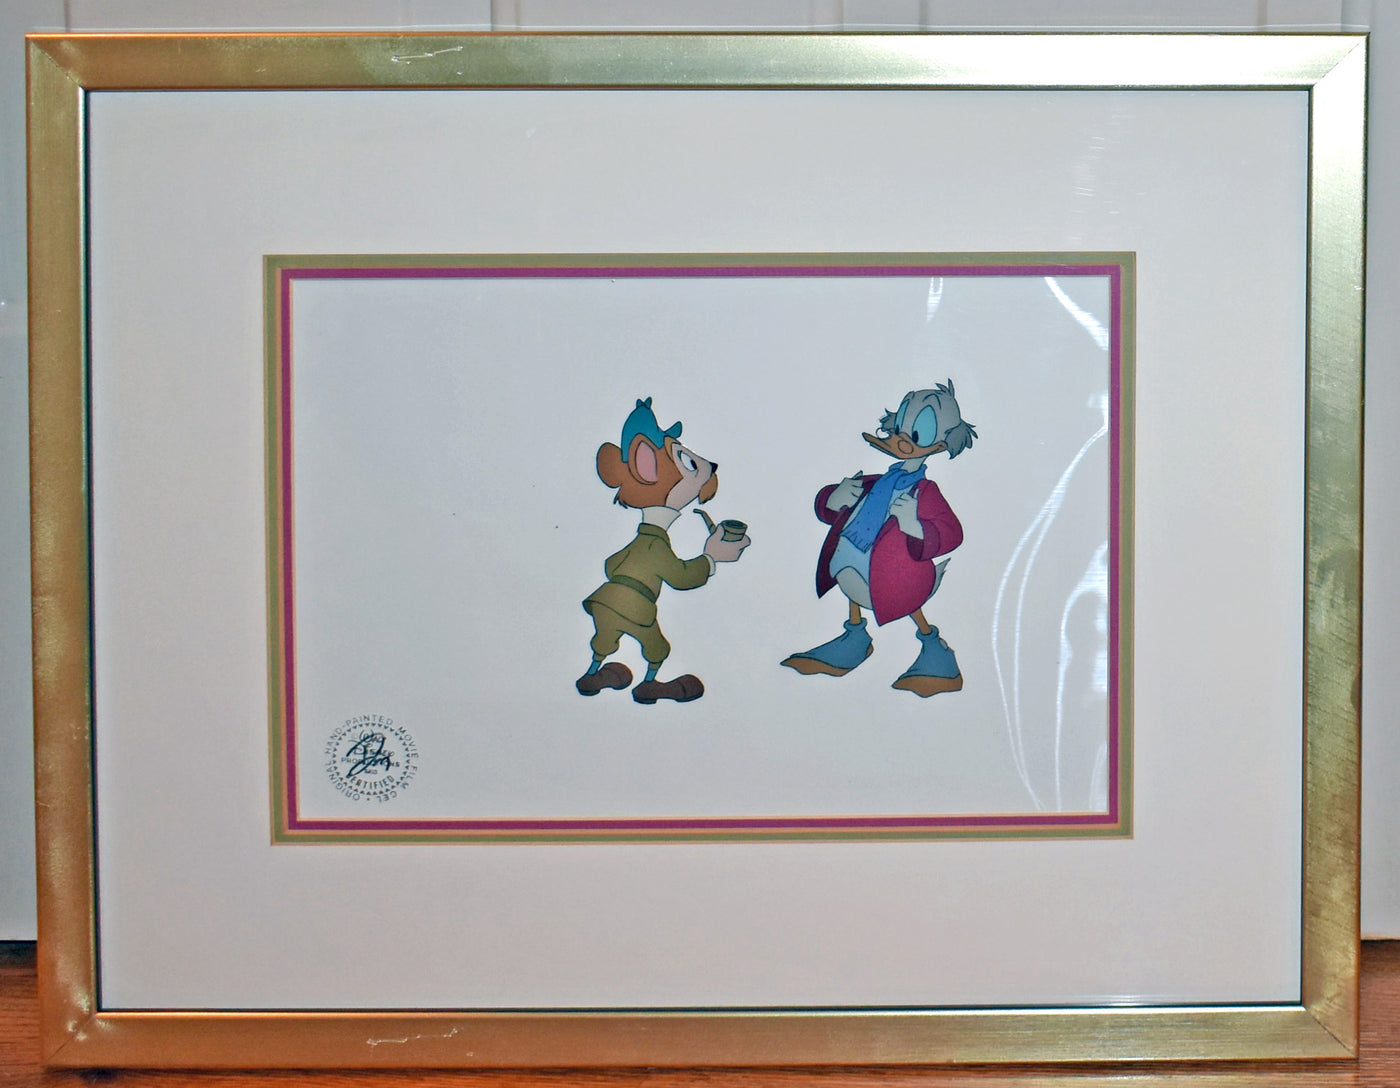 Original Walt Disney Production Cel from Mickey's Christmas Carol featuring Scrooge McDuck